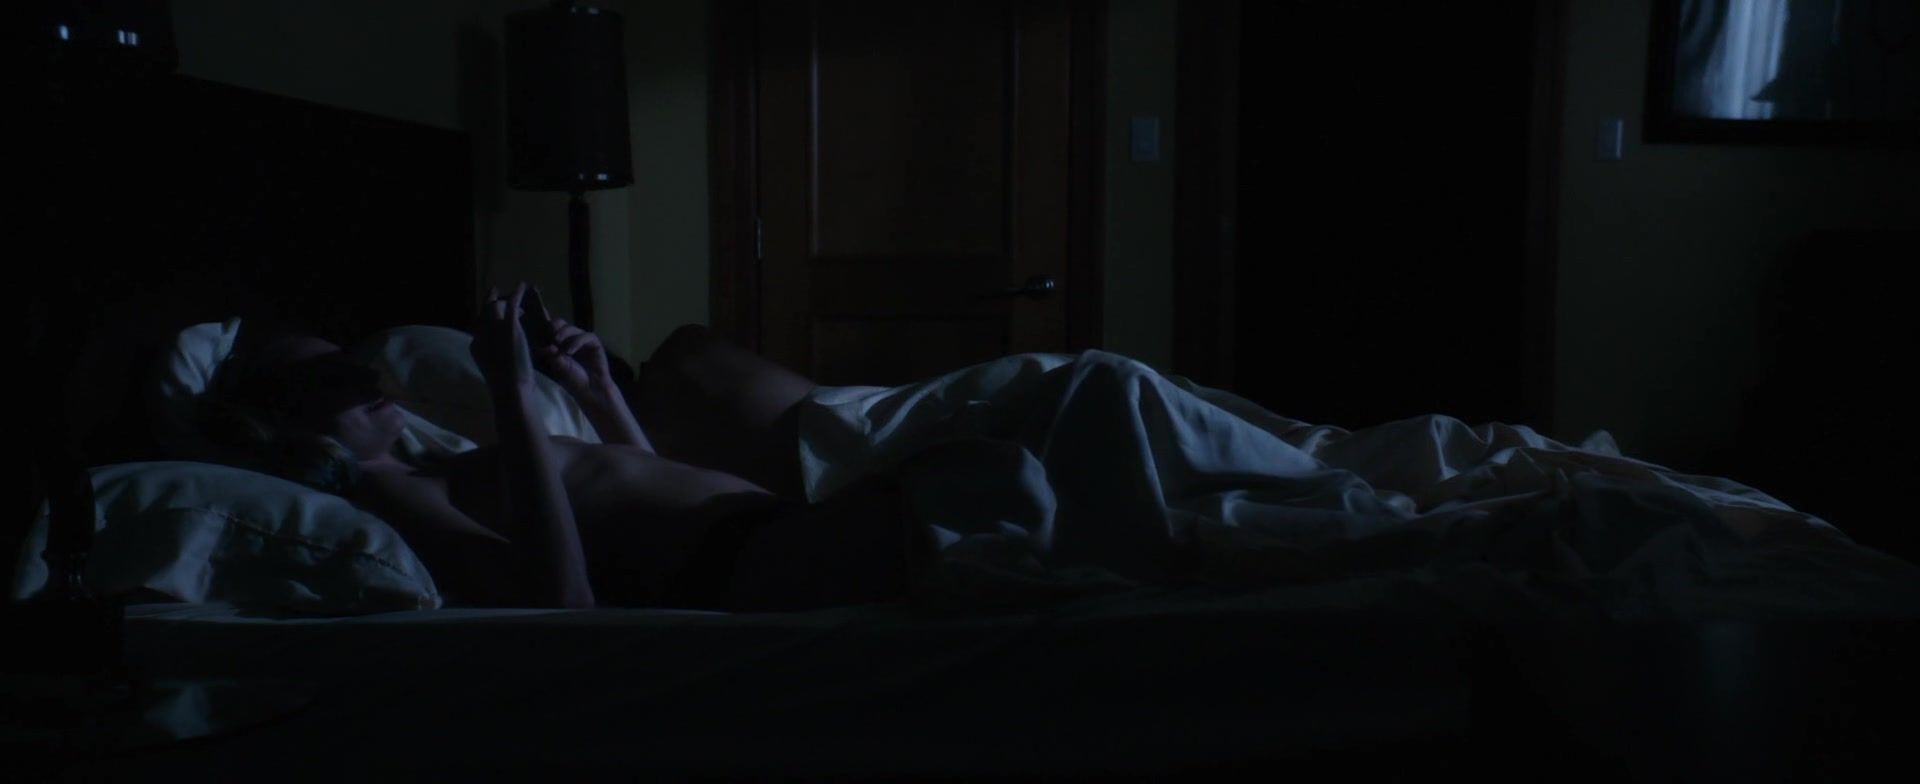 Milf Porn Autumn Kendrick, Claudia Lee, Miranda Rae Mayo - The Girl In The Photographs (2015) Full HD BR (Sex, Nude) Pov Blow Job - 1